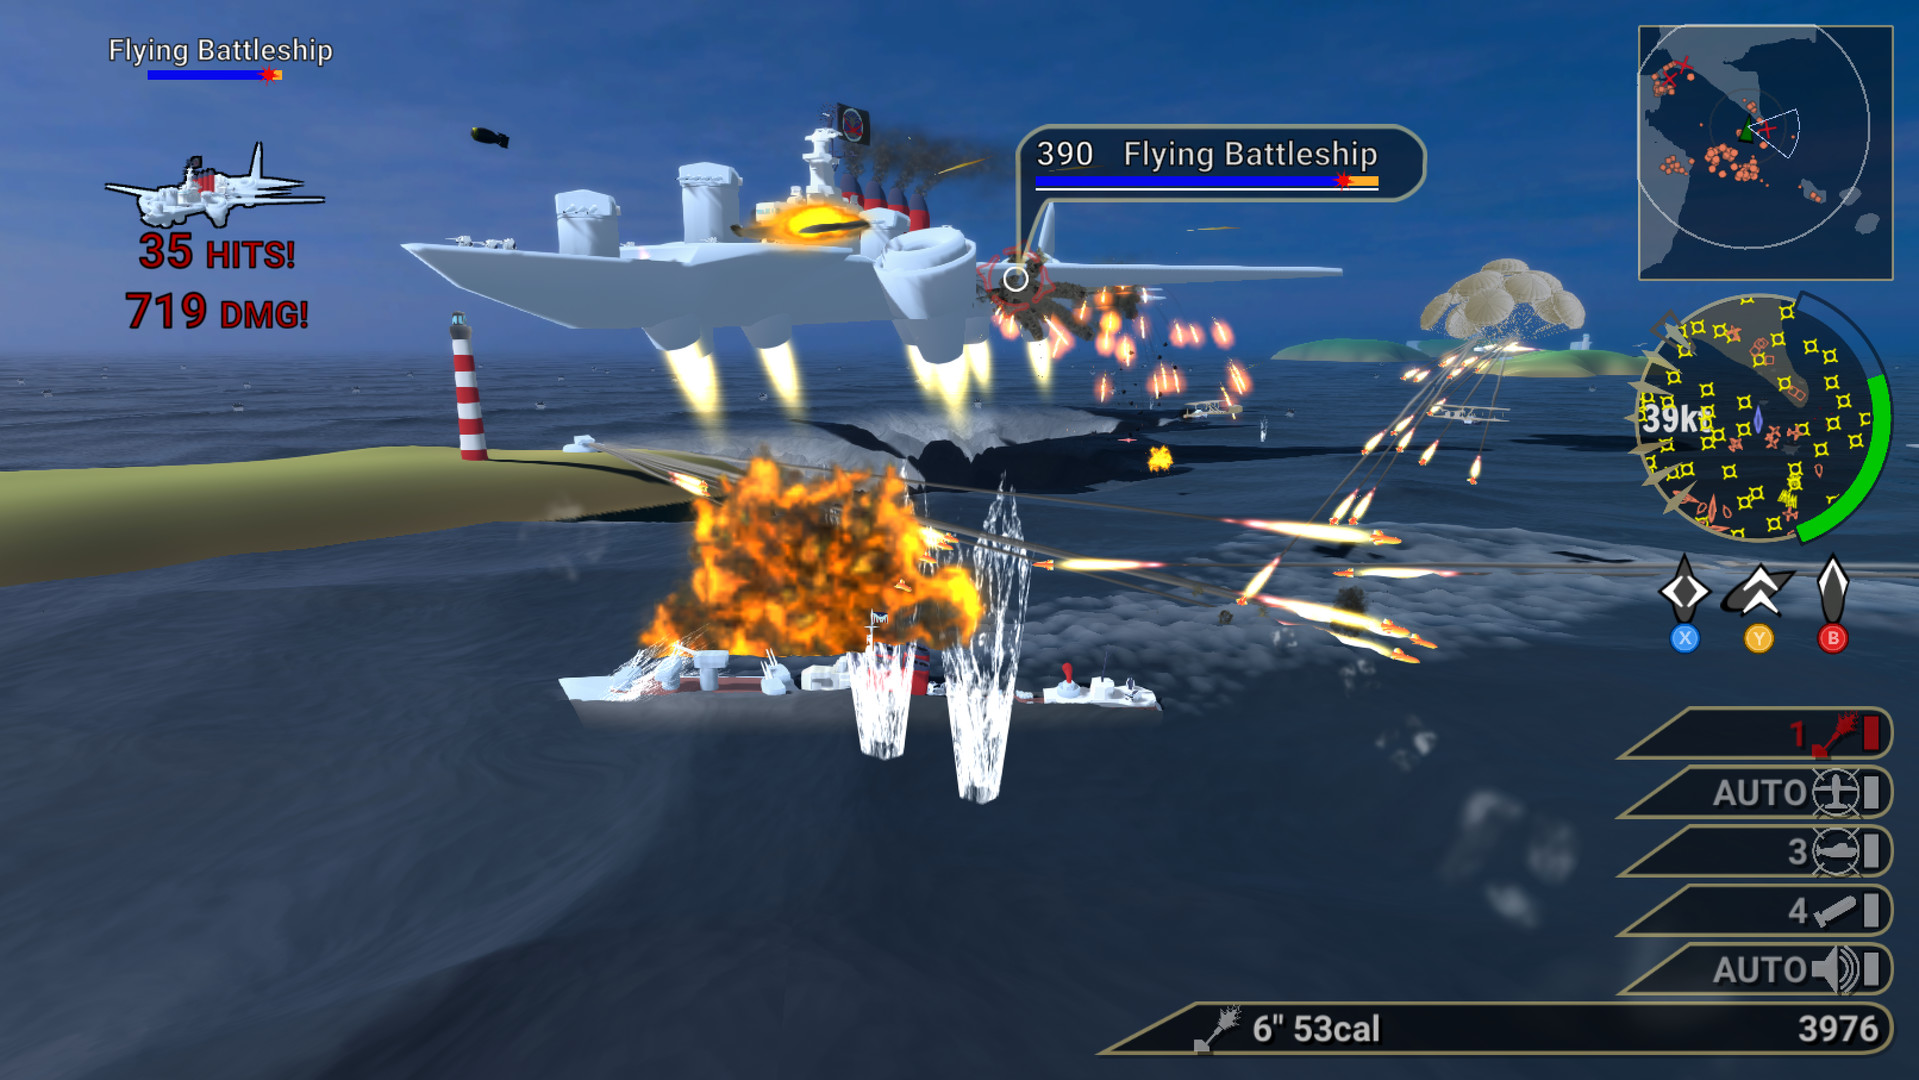 Arcade naval combat simulation game Waves of Steel